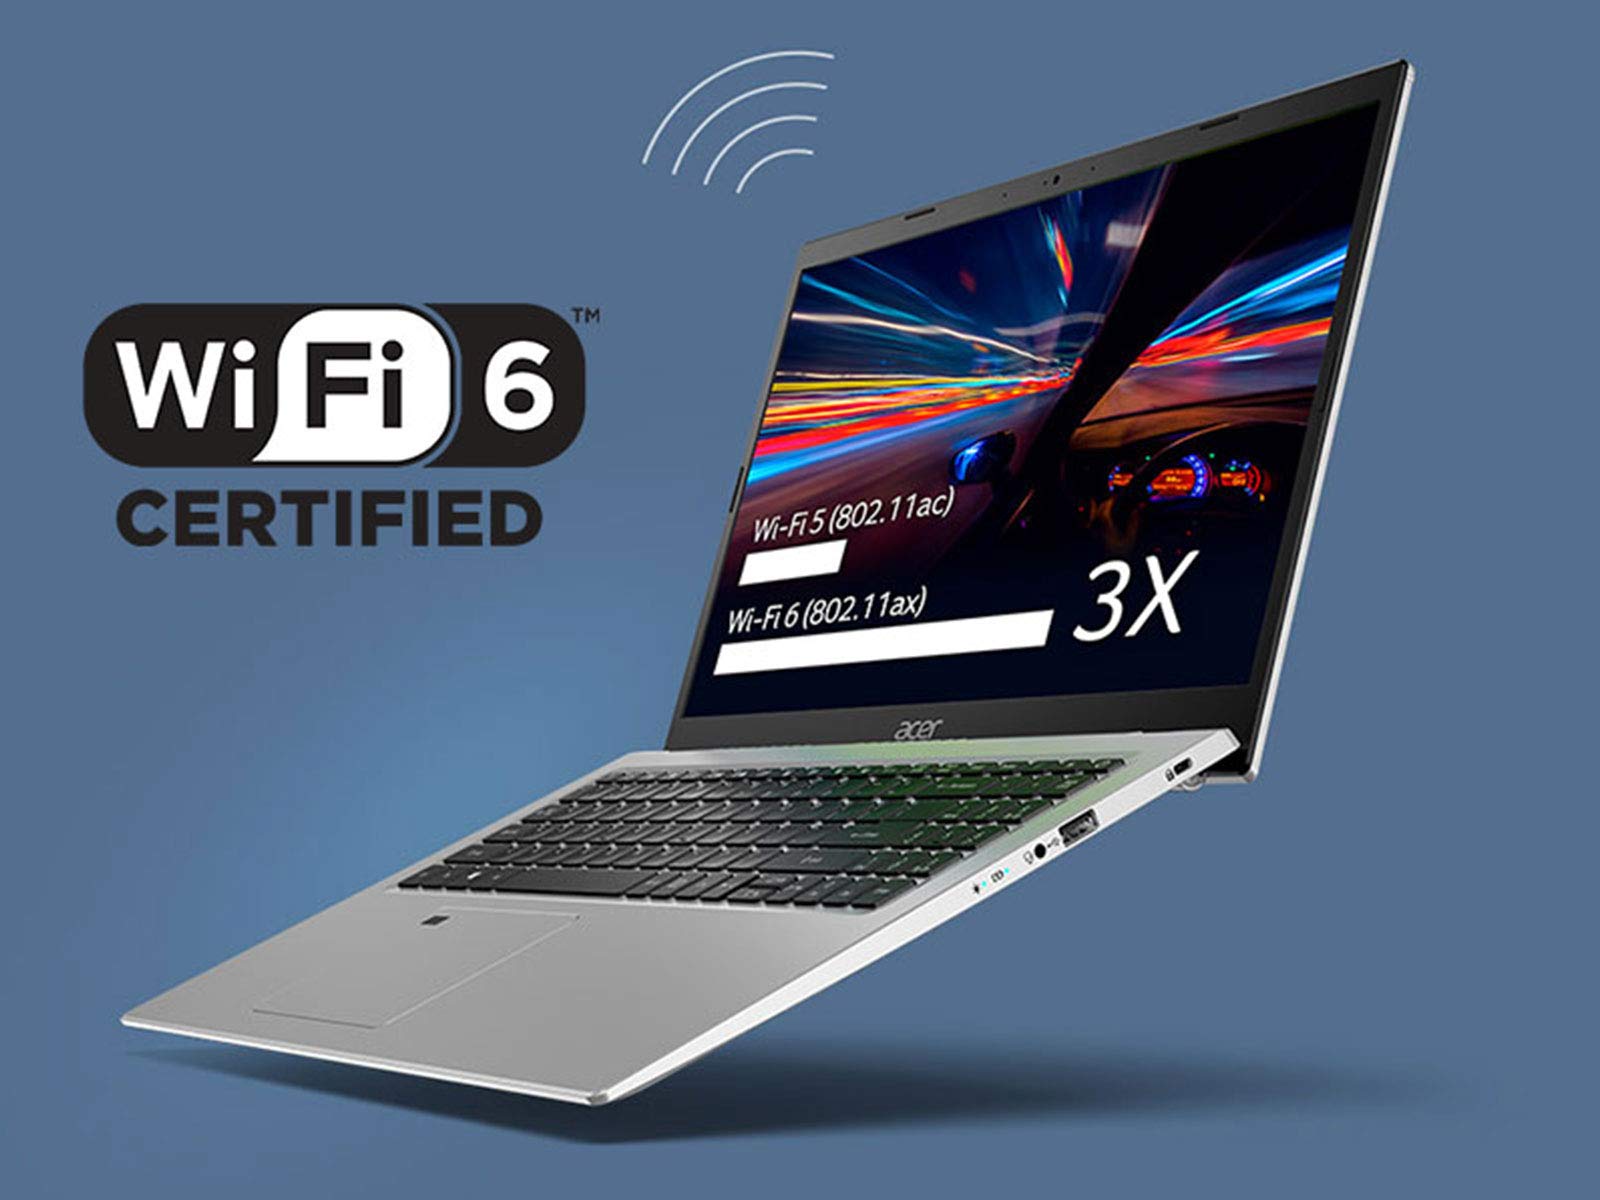 Acer Aspire 5 A517-52-75N6 Laptop | 17.3" Full HD IPS Display | 11th Gen Intel Core i7-1165G7 | Intel Iris Xe Graphics | 16GB DDR4 | 512GB SSD | WiFi 6 | Fingerprint Reader | BL Keyboard | Windows 11